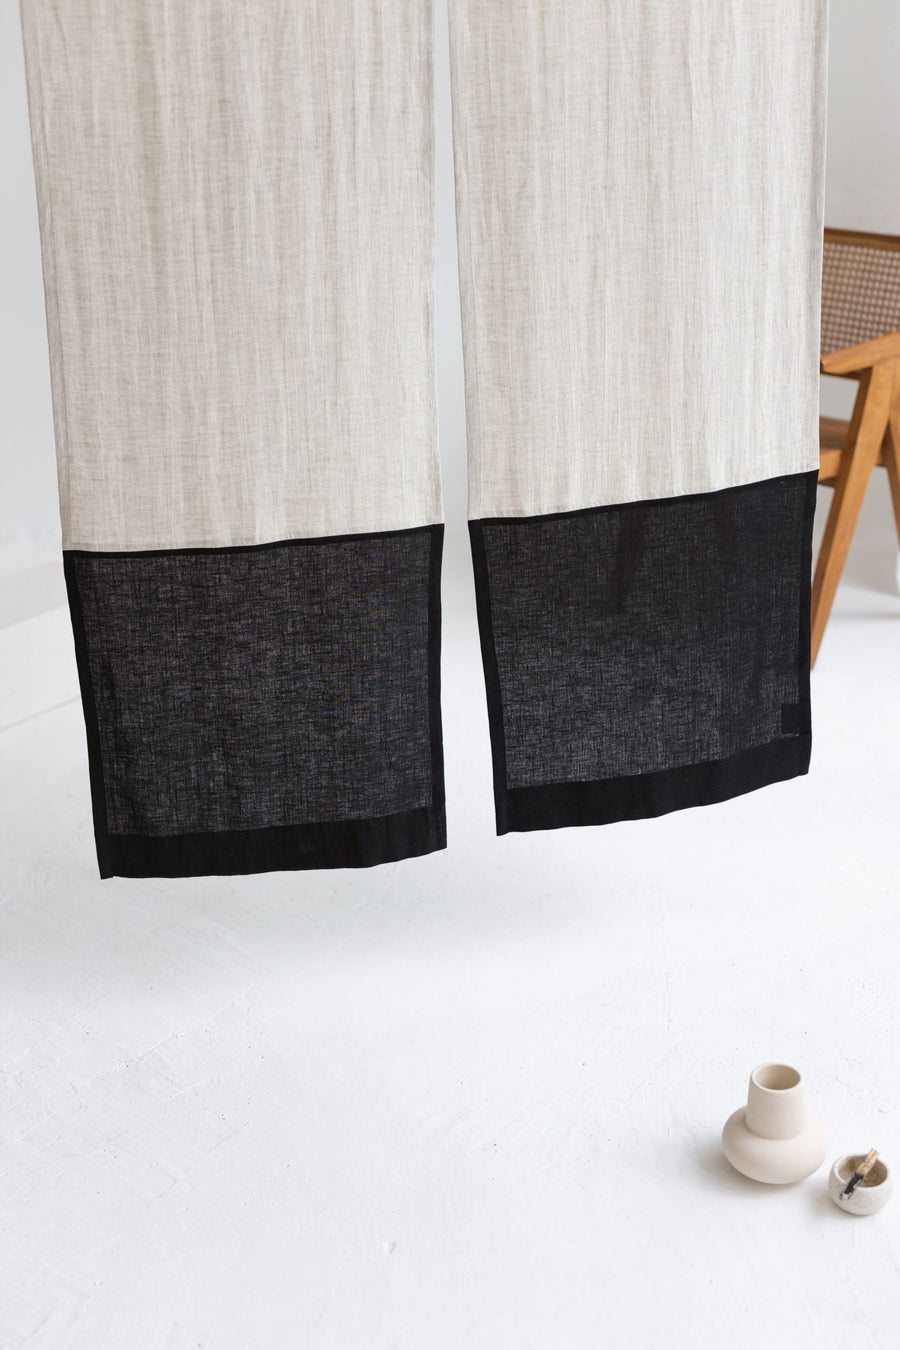 Color Block Natural Light Black Linen Japanese Noren Curtain